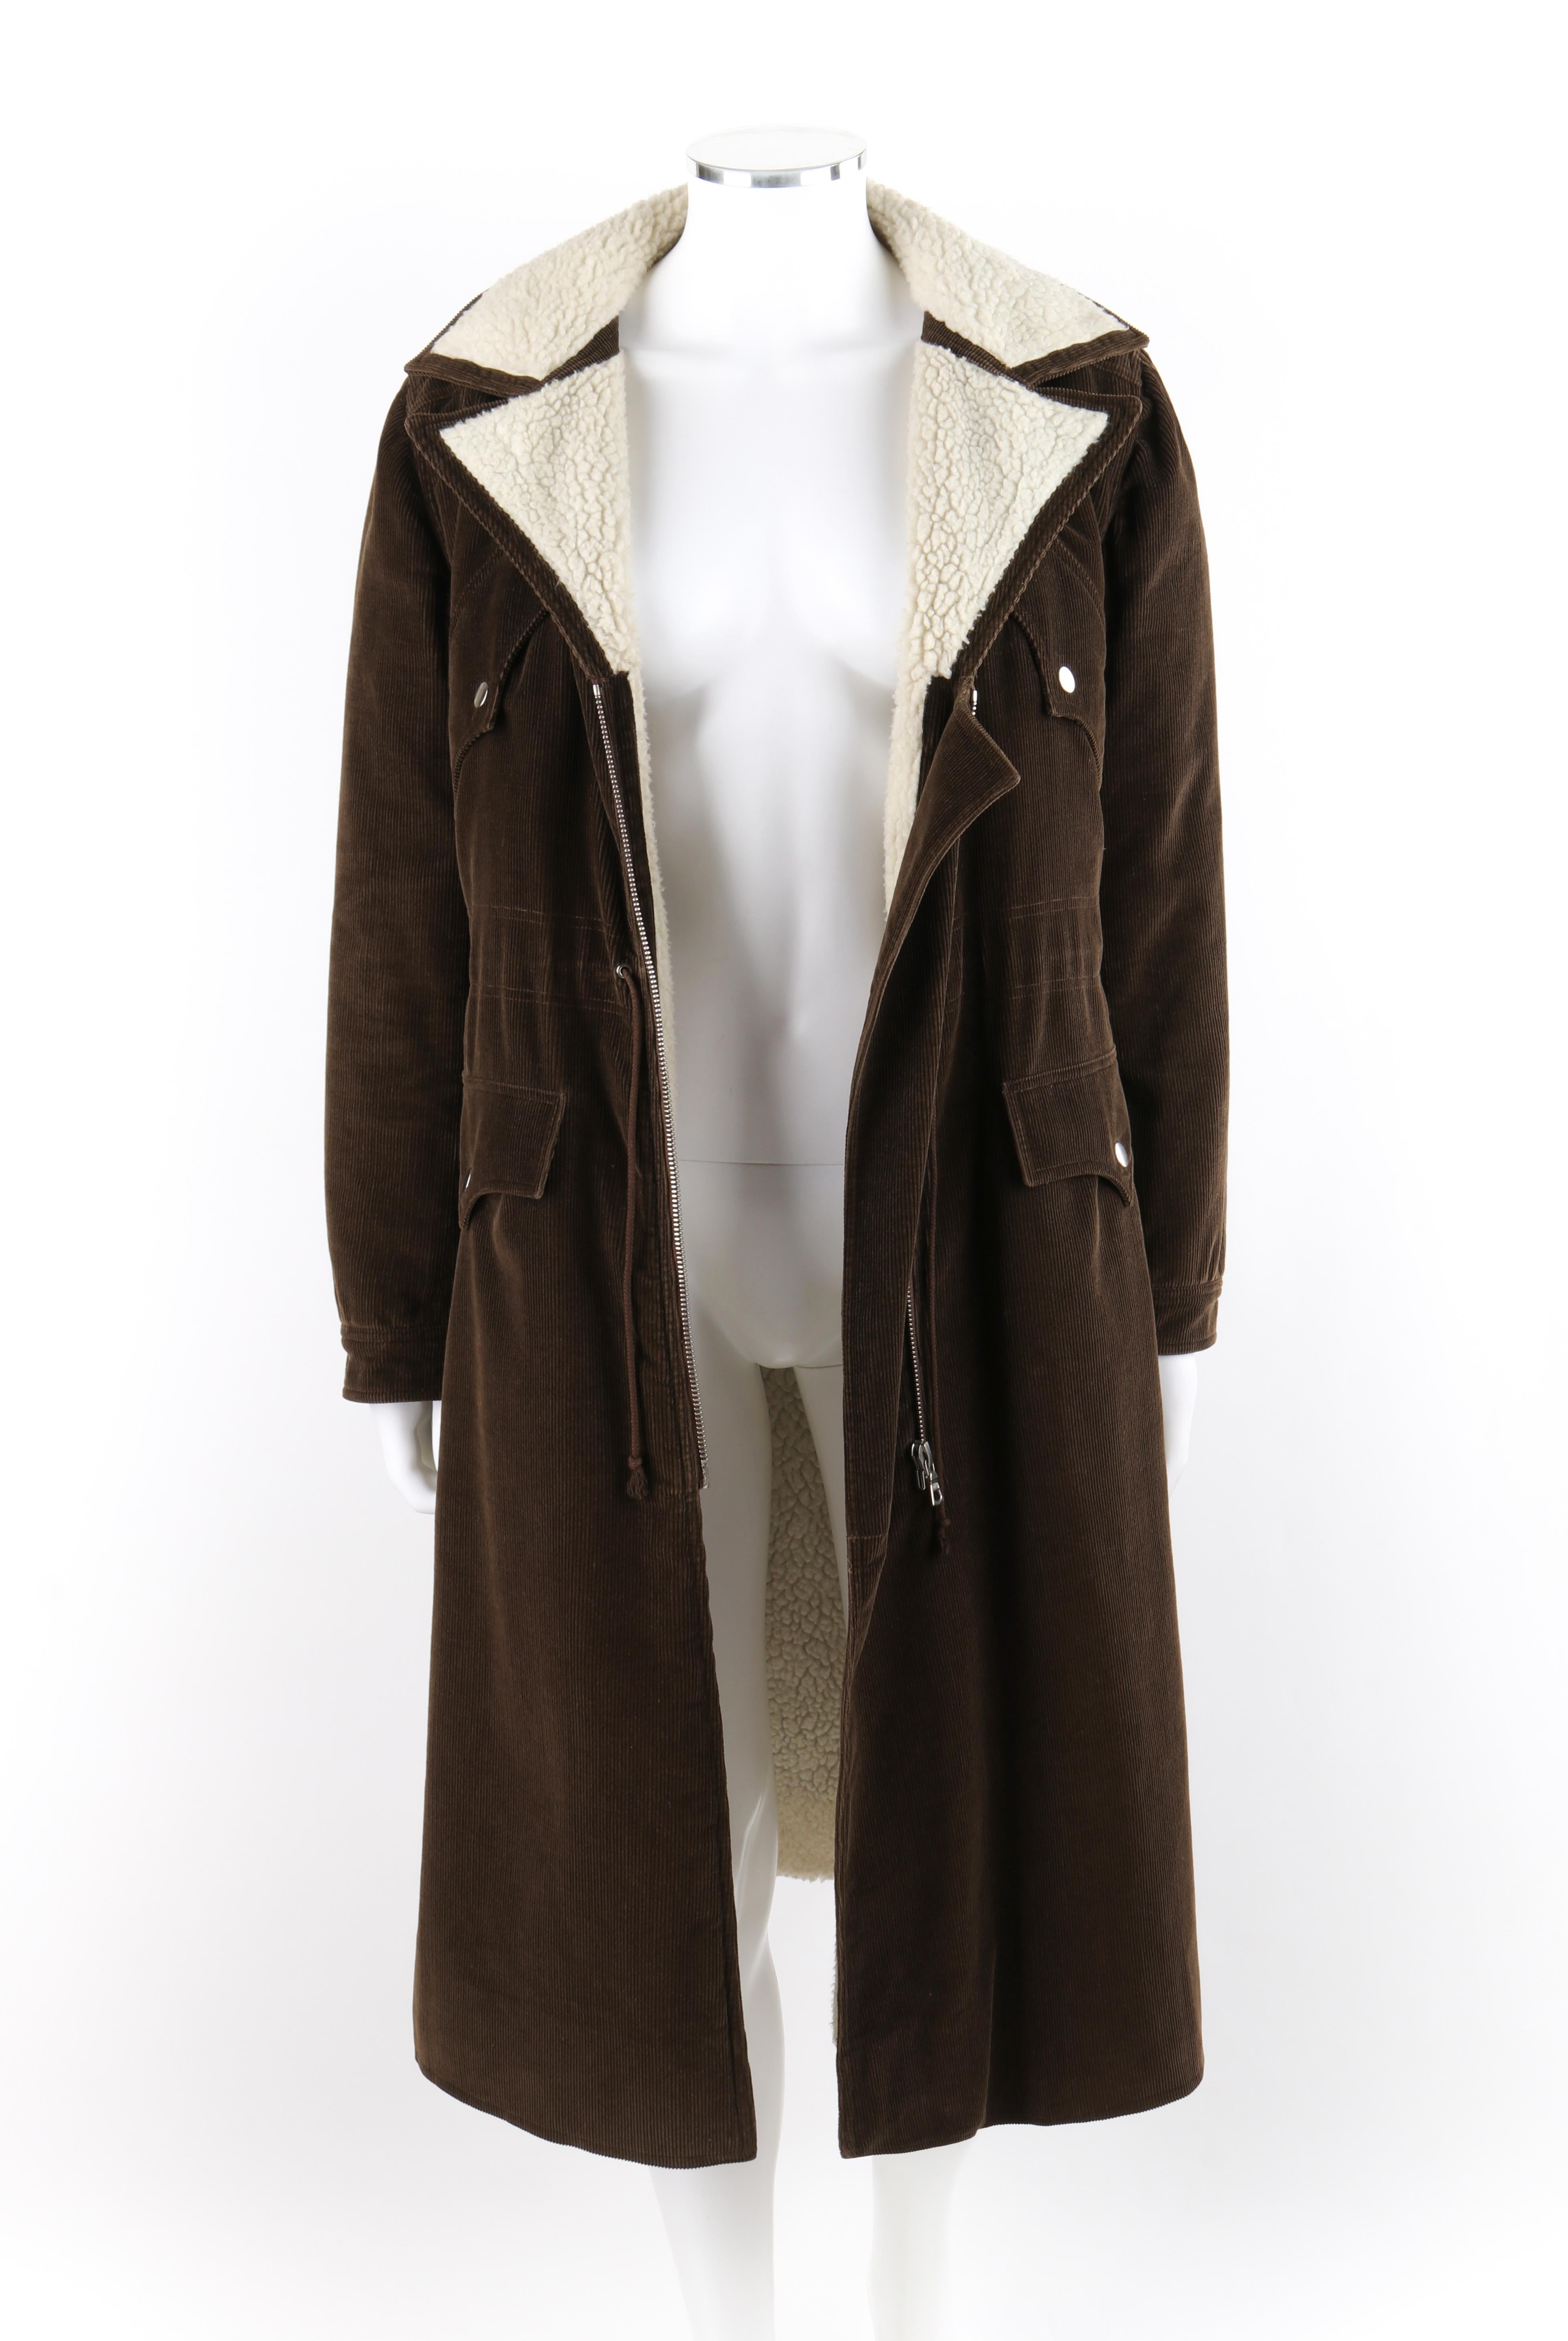 COURREGES Couture Future c.1970’s Brown Corduroy Cinched Waist Long Coat Jacket For Sale 3